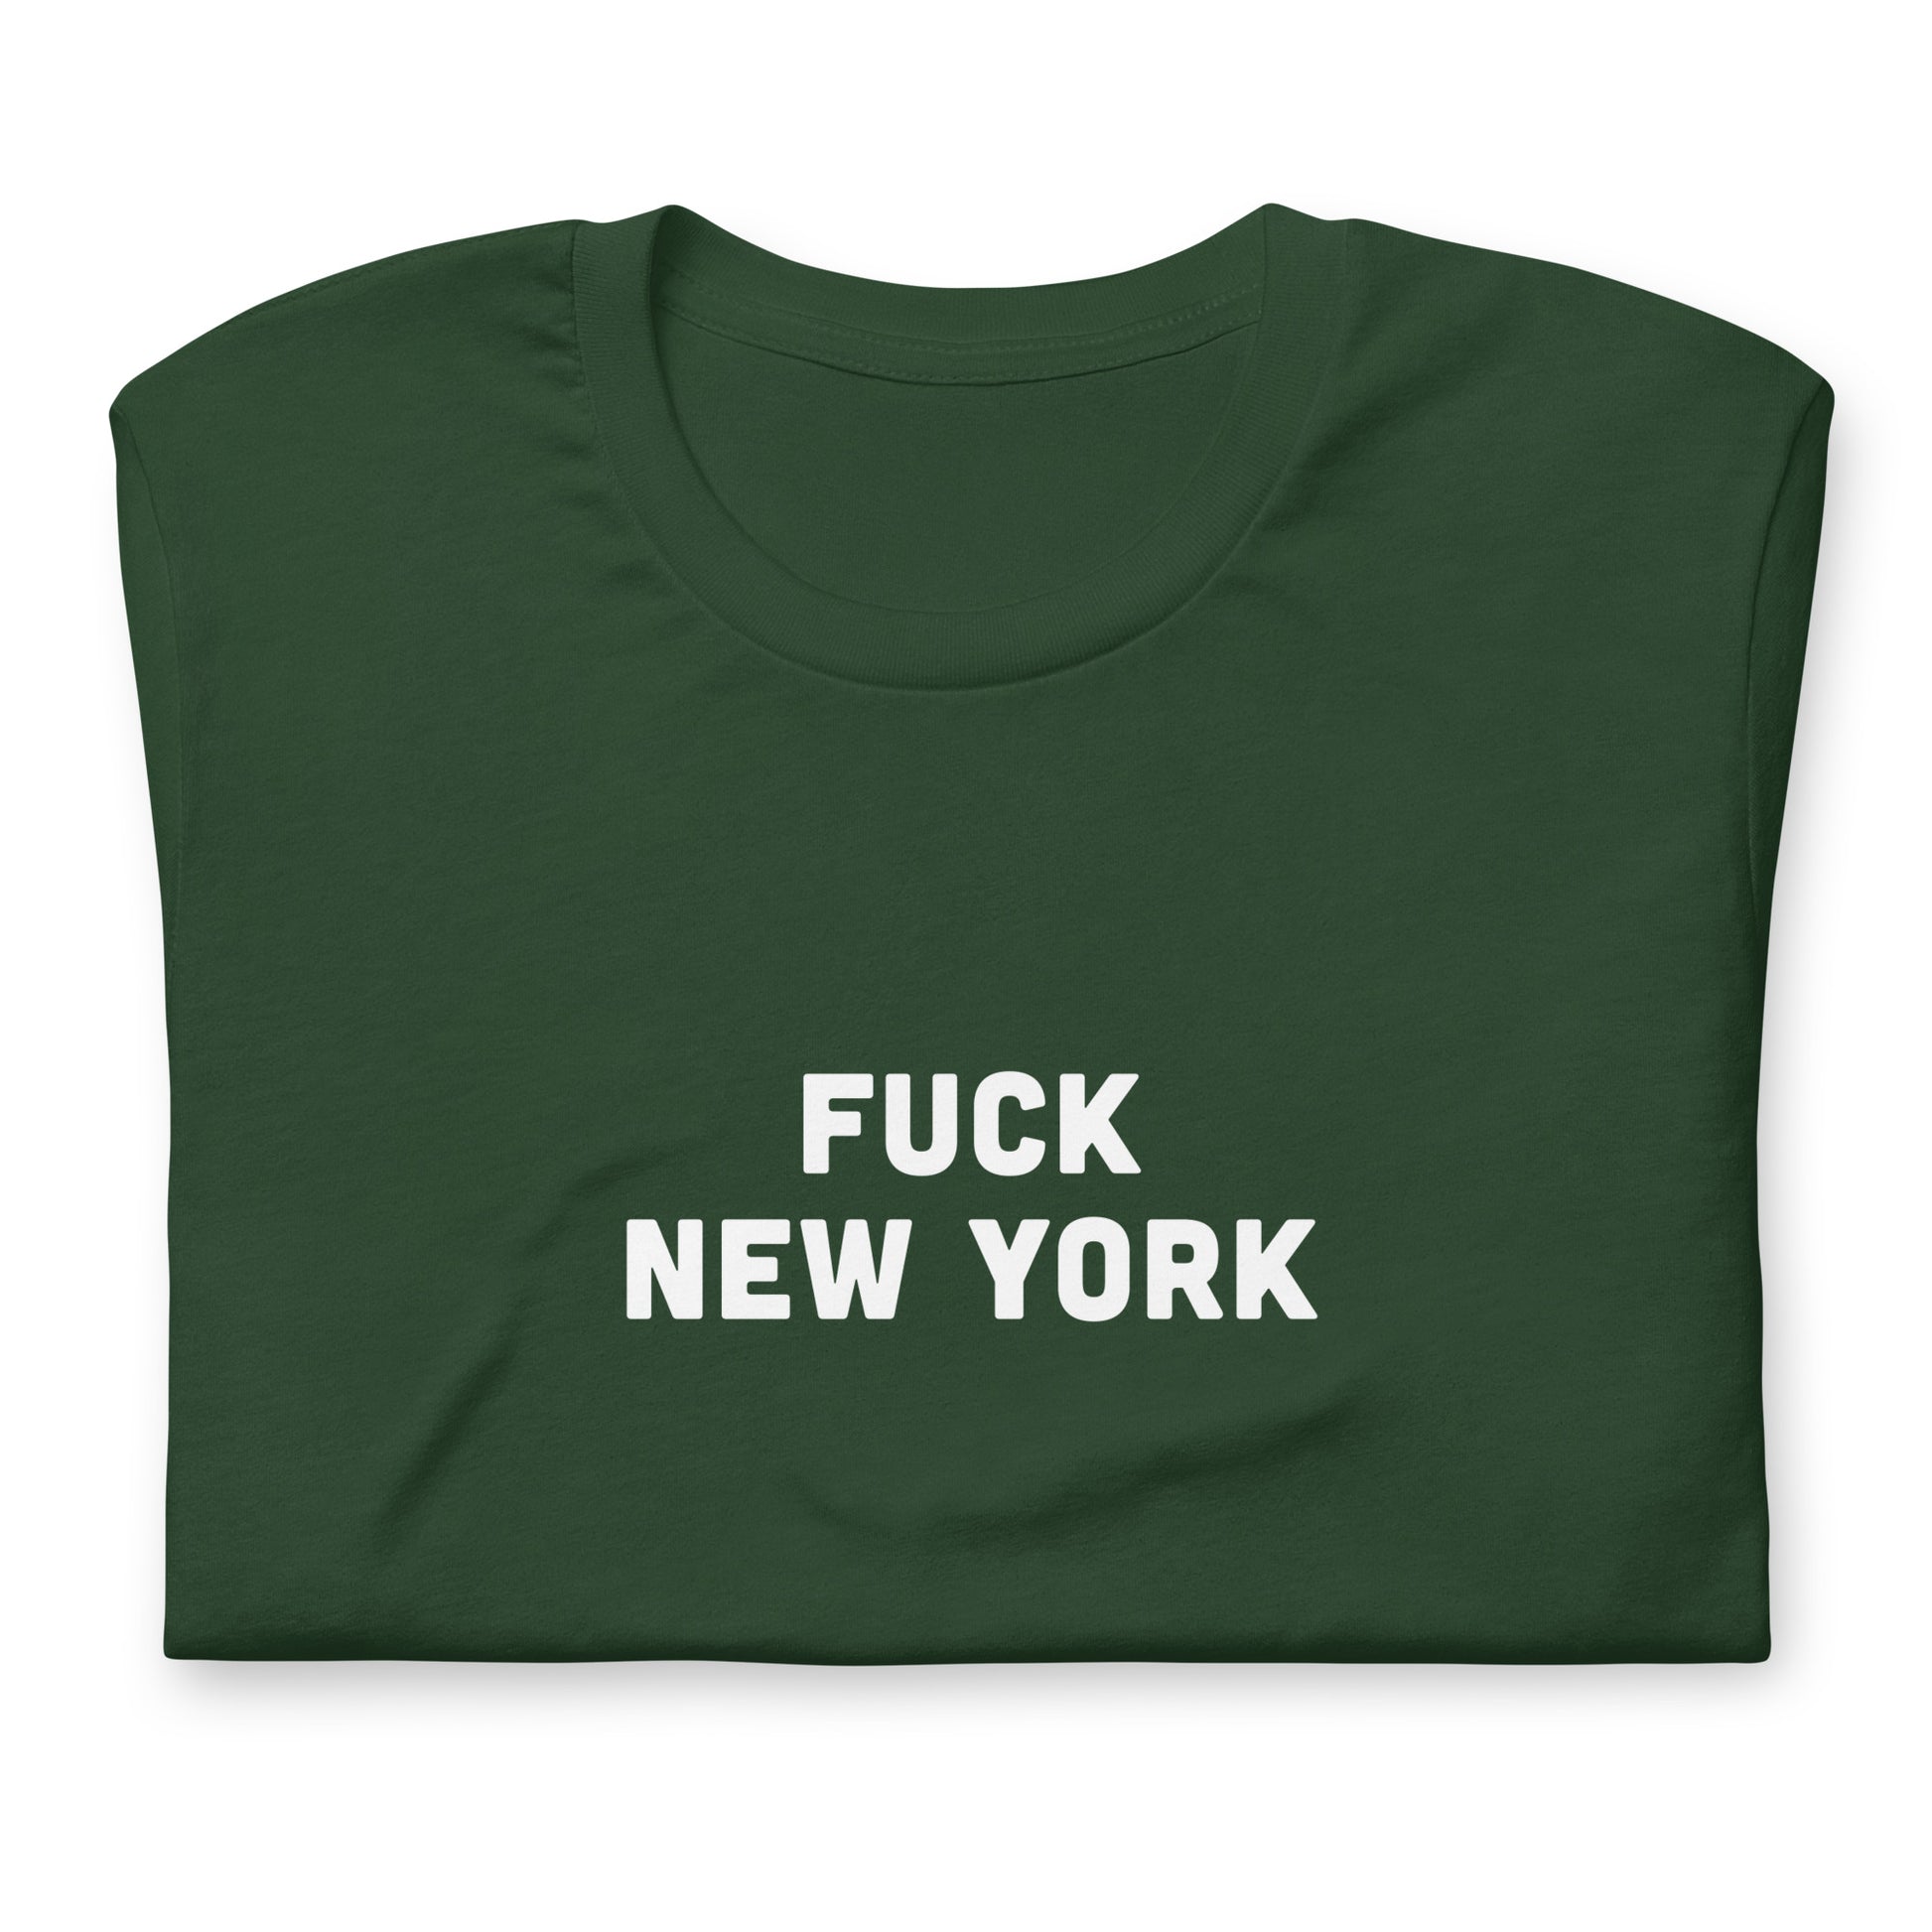 Fuck New York T-Shirt Size M Color Black